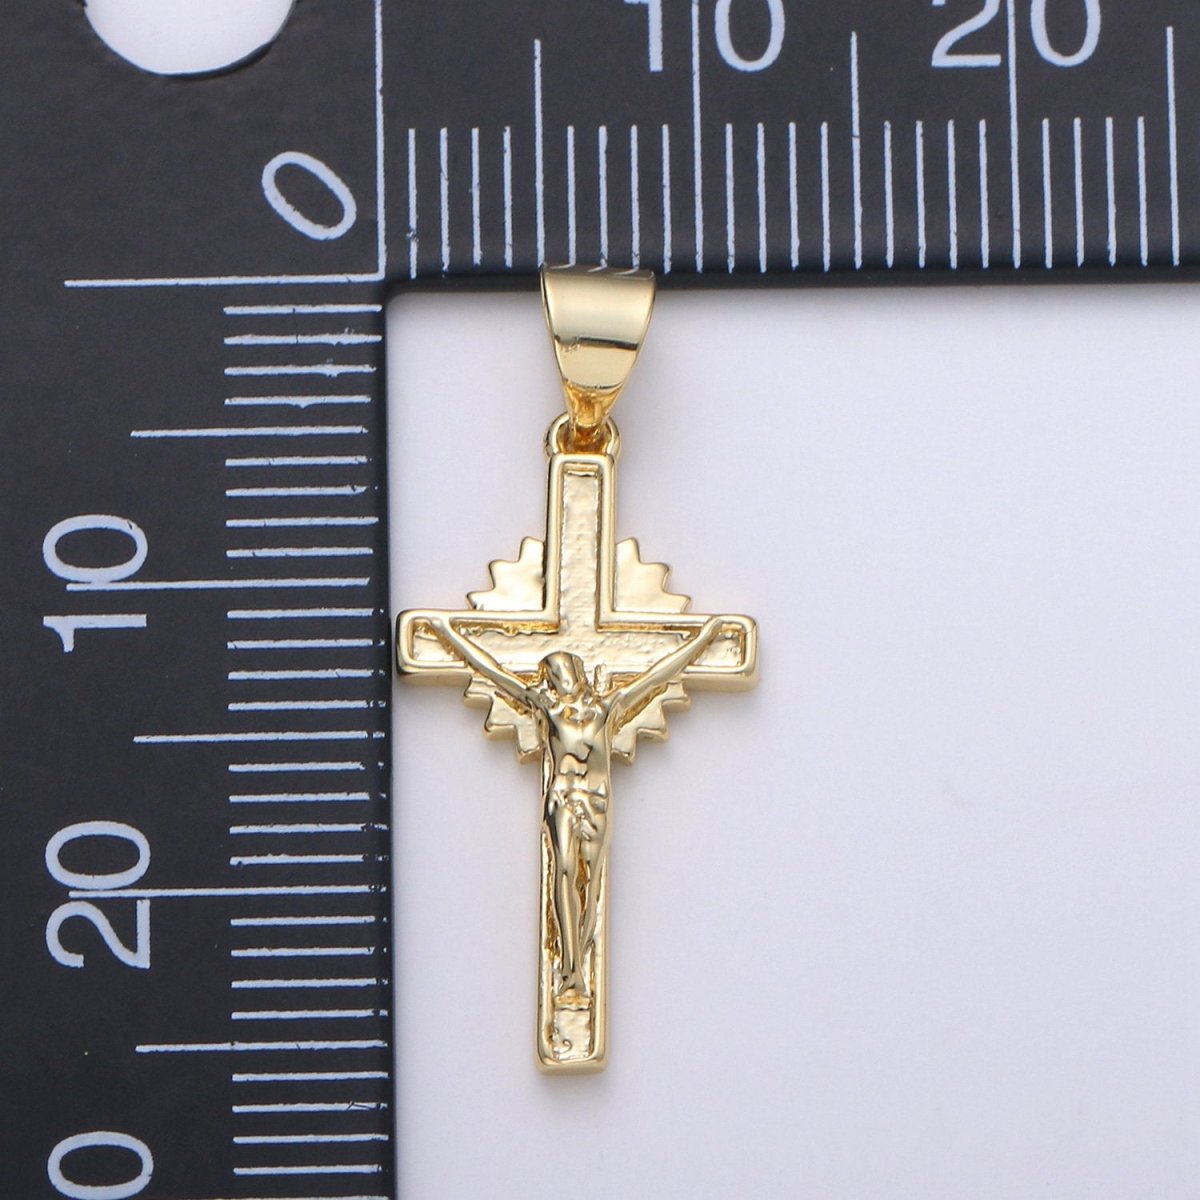 Gold Cross Pendant, crucifix cross charm Jesus Pendant Religious Necklace Pendant, 14k Gold Filled Religious Jewelry Making I-913 - DLUXCA